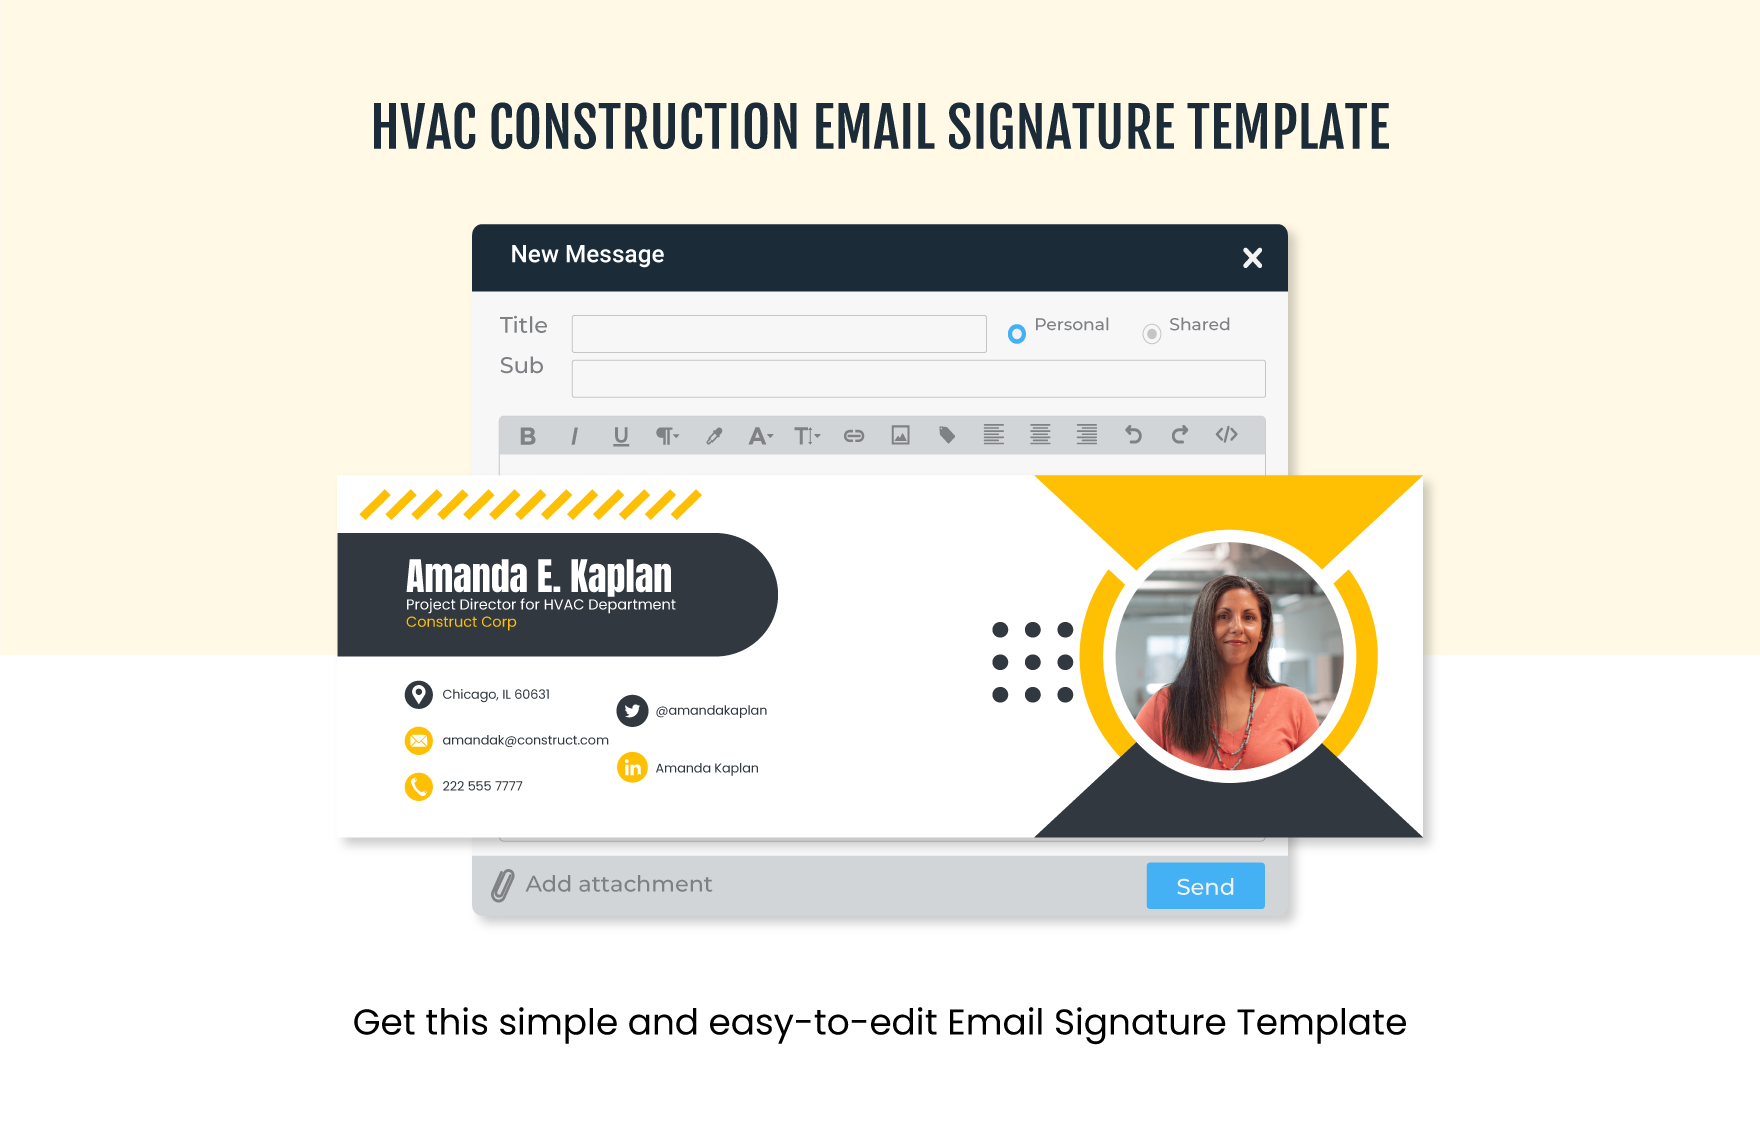 HVAC Construction Email Signature Template